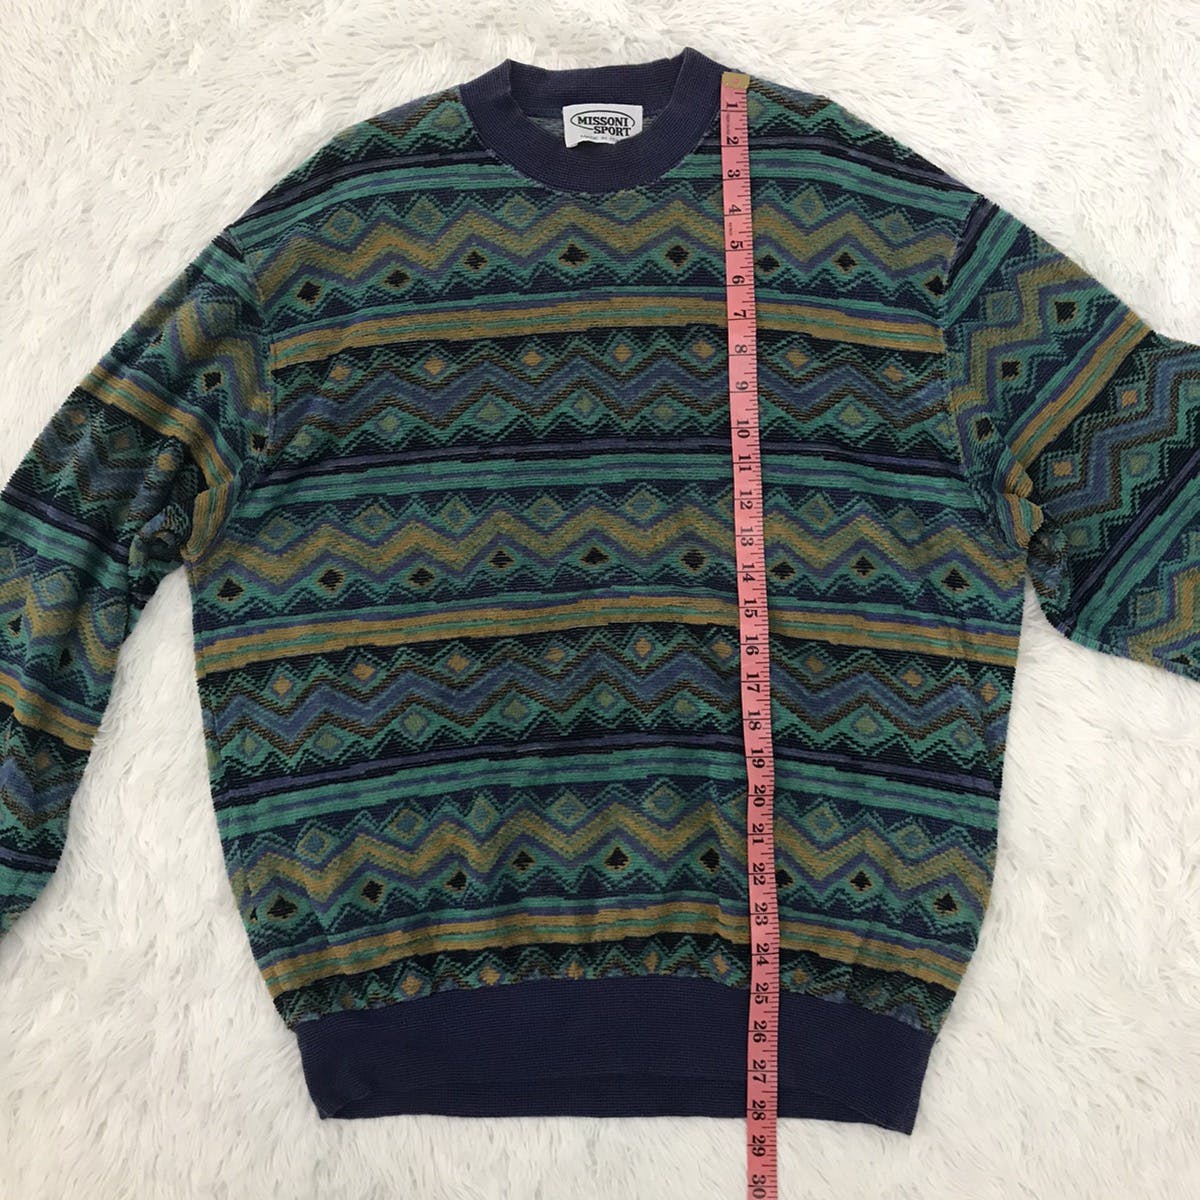 Missoni Sport Cozy Printed Sweater/Sweatshirt Jumper - 16